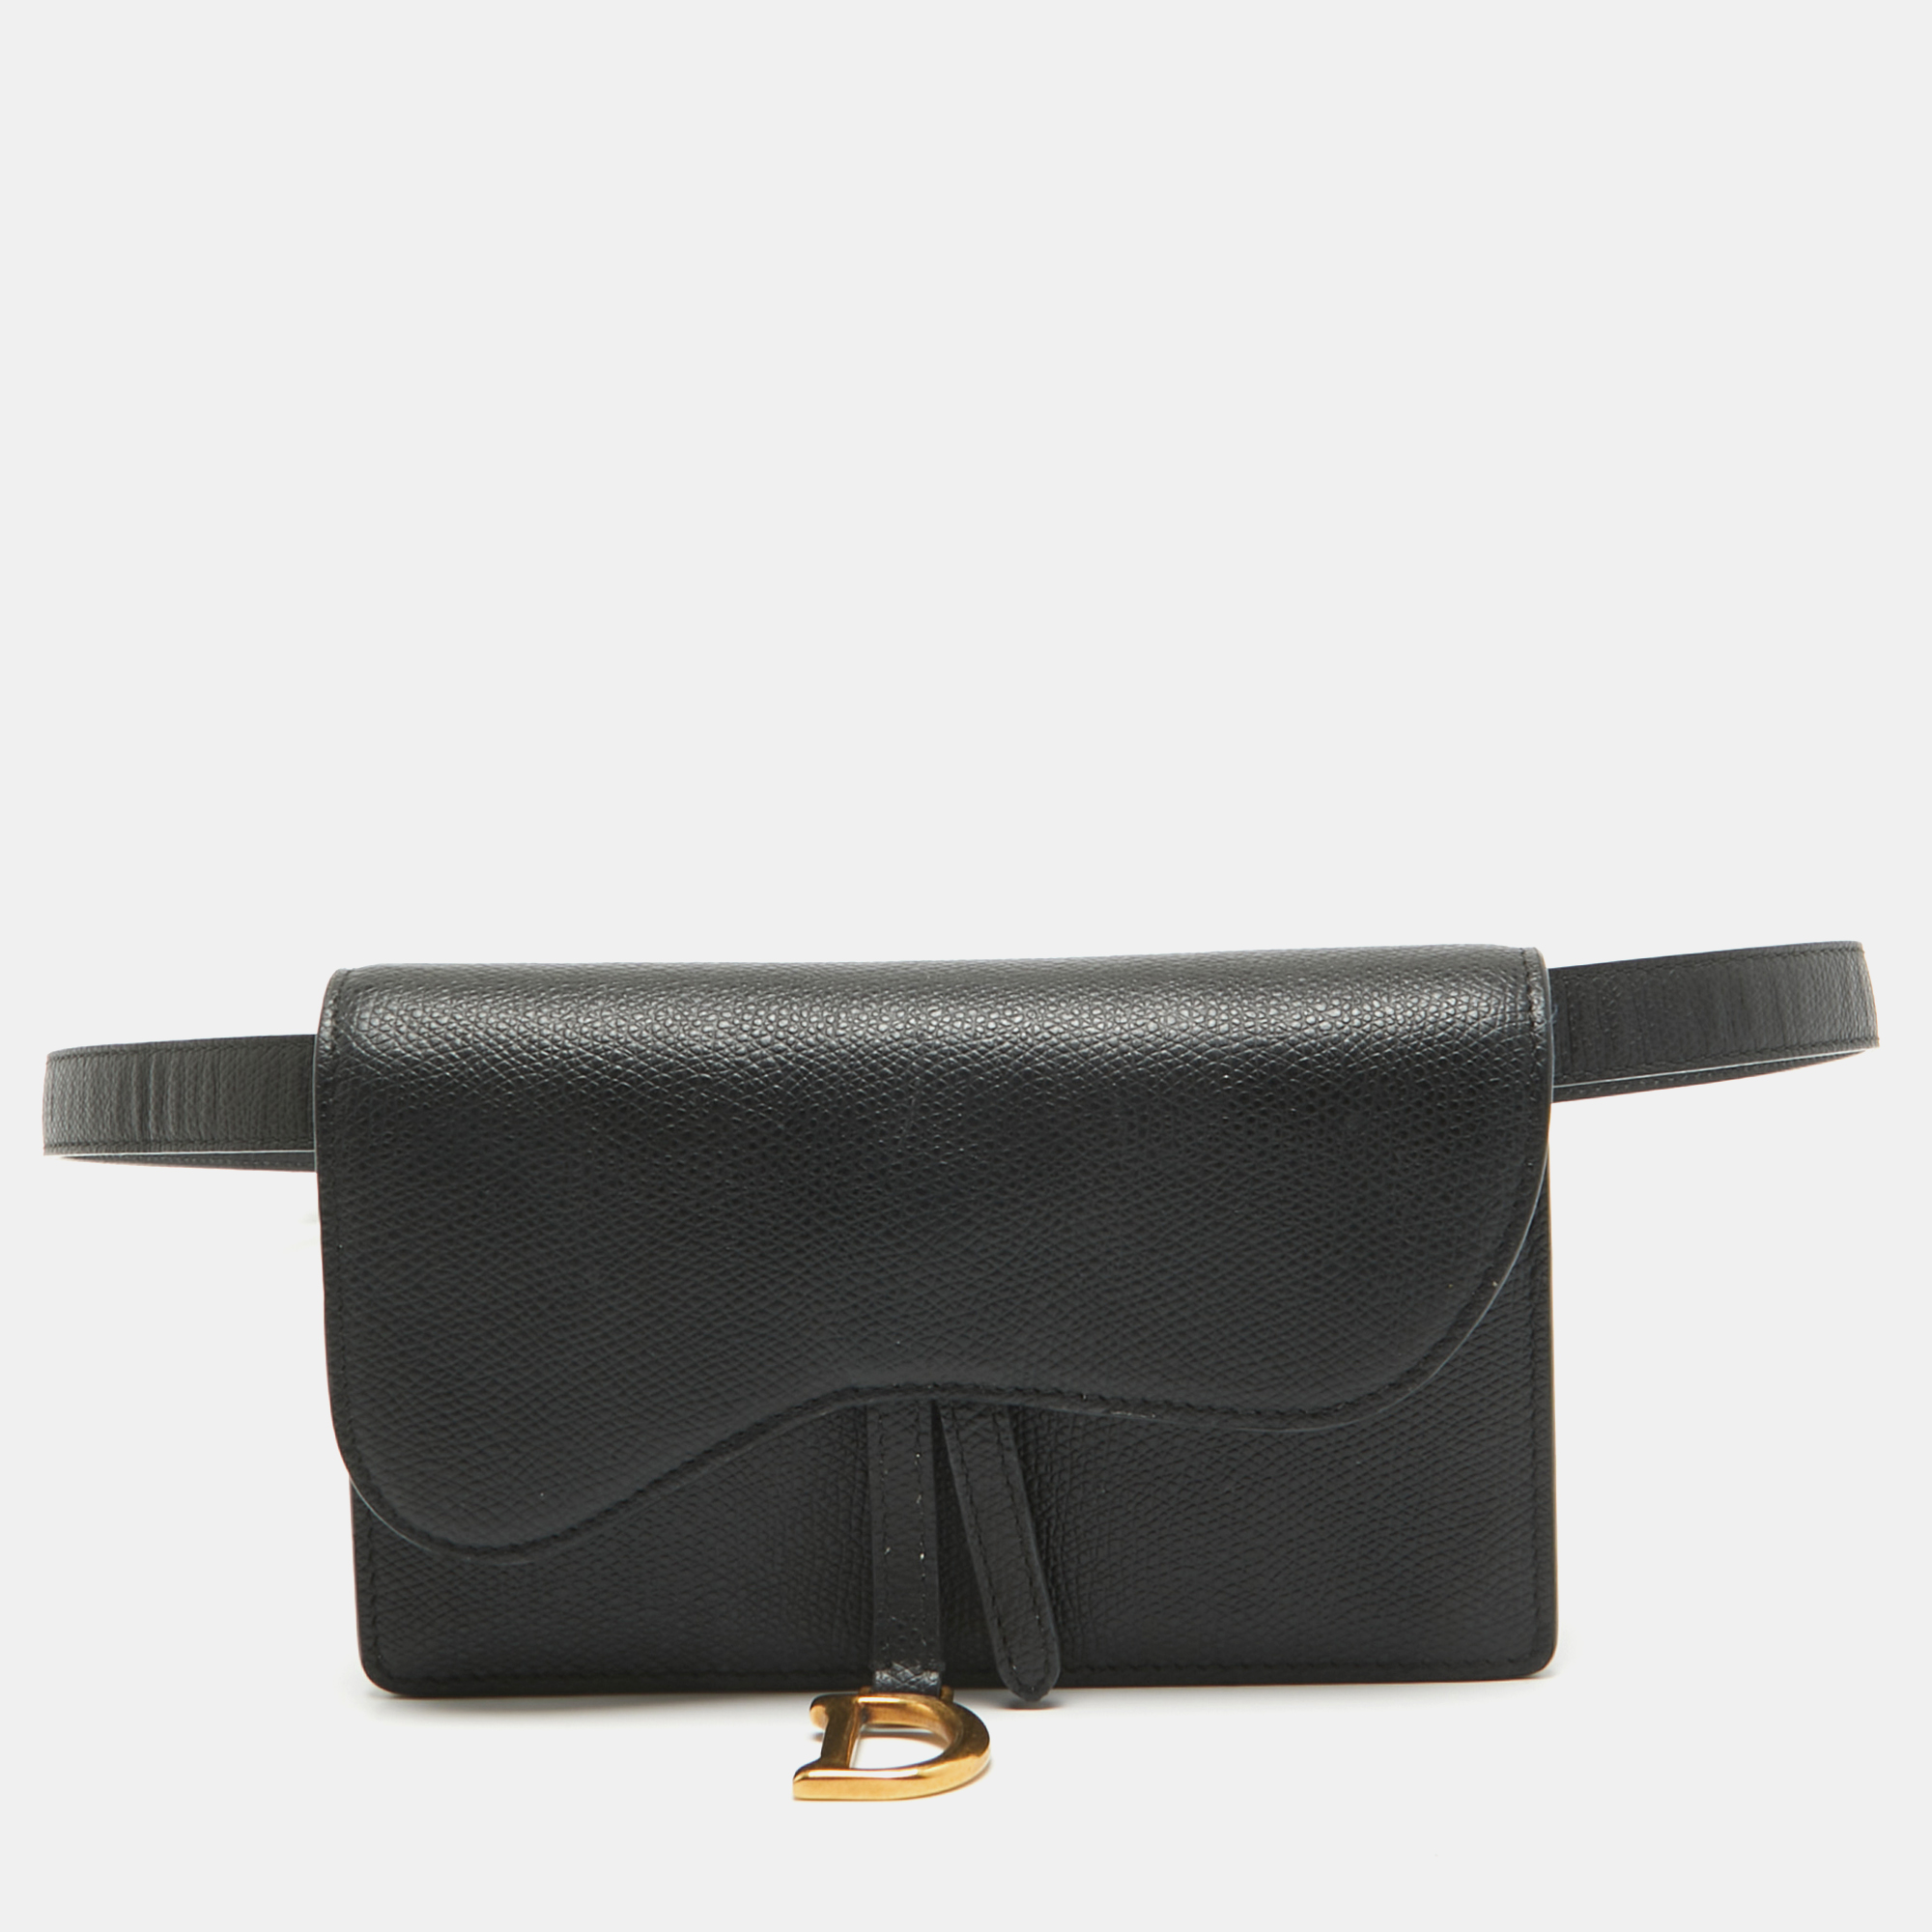 Dior black leather saddle belt pouch